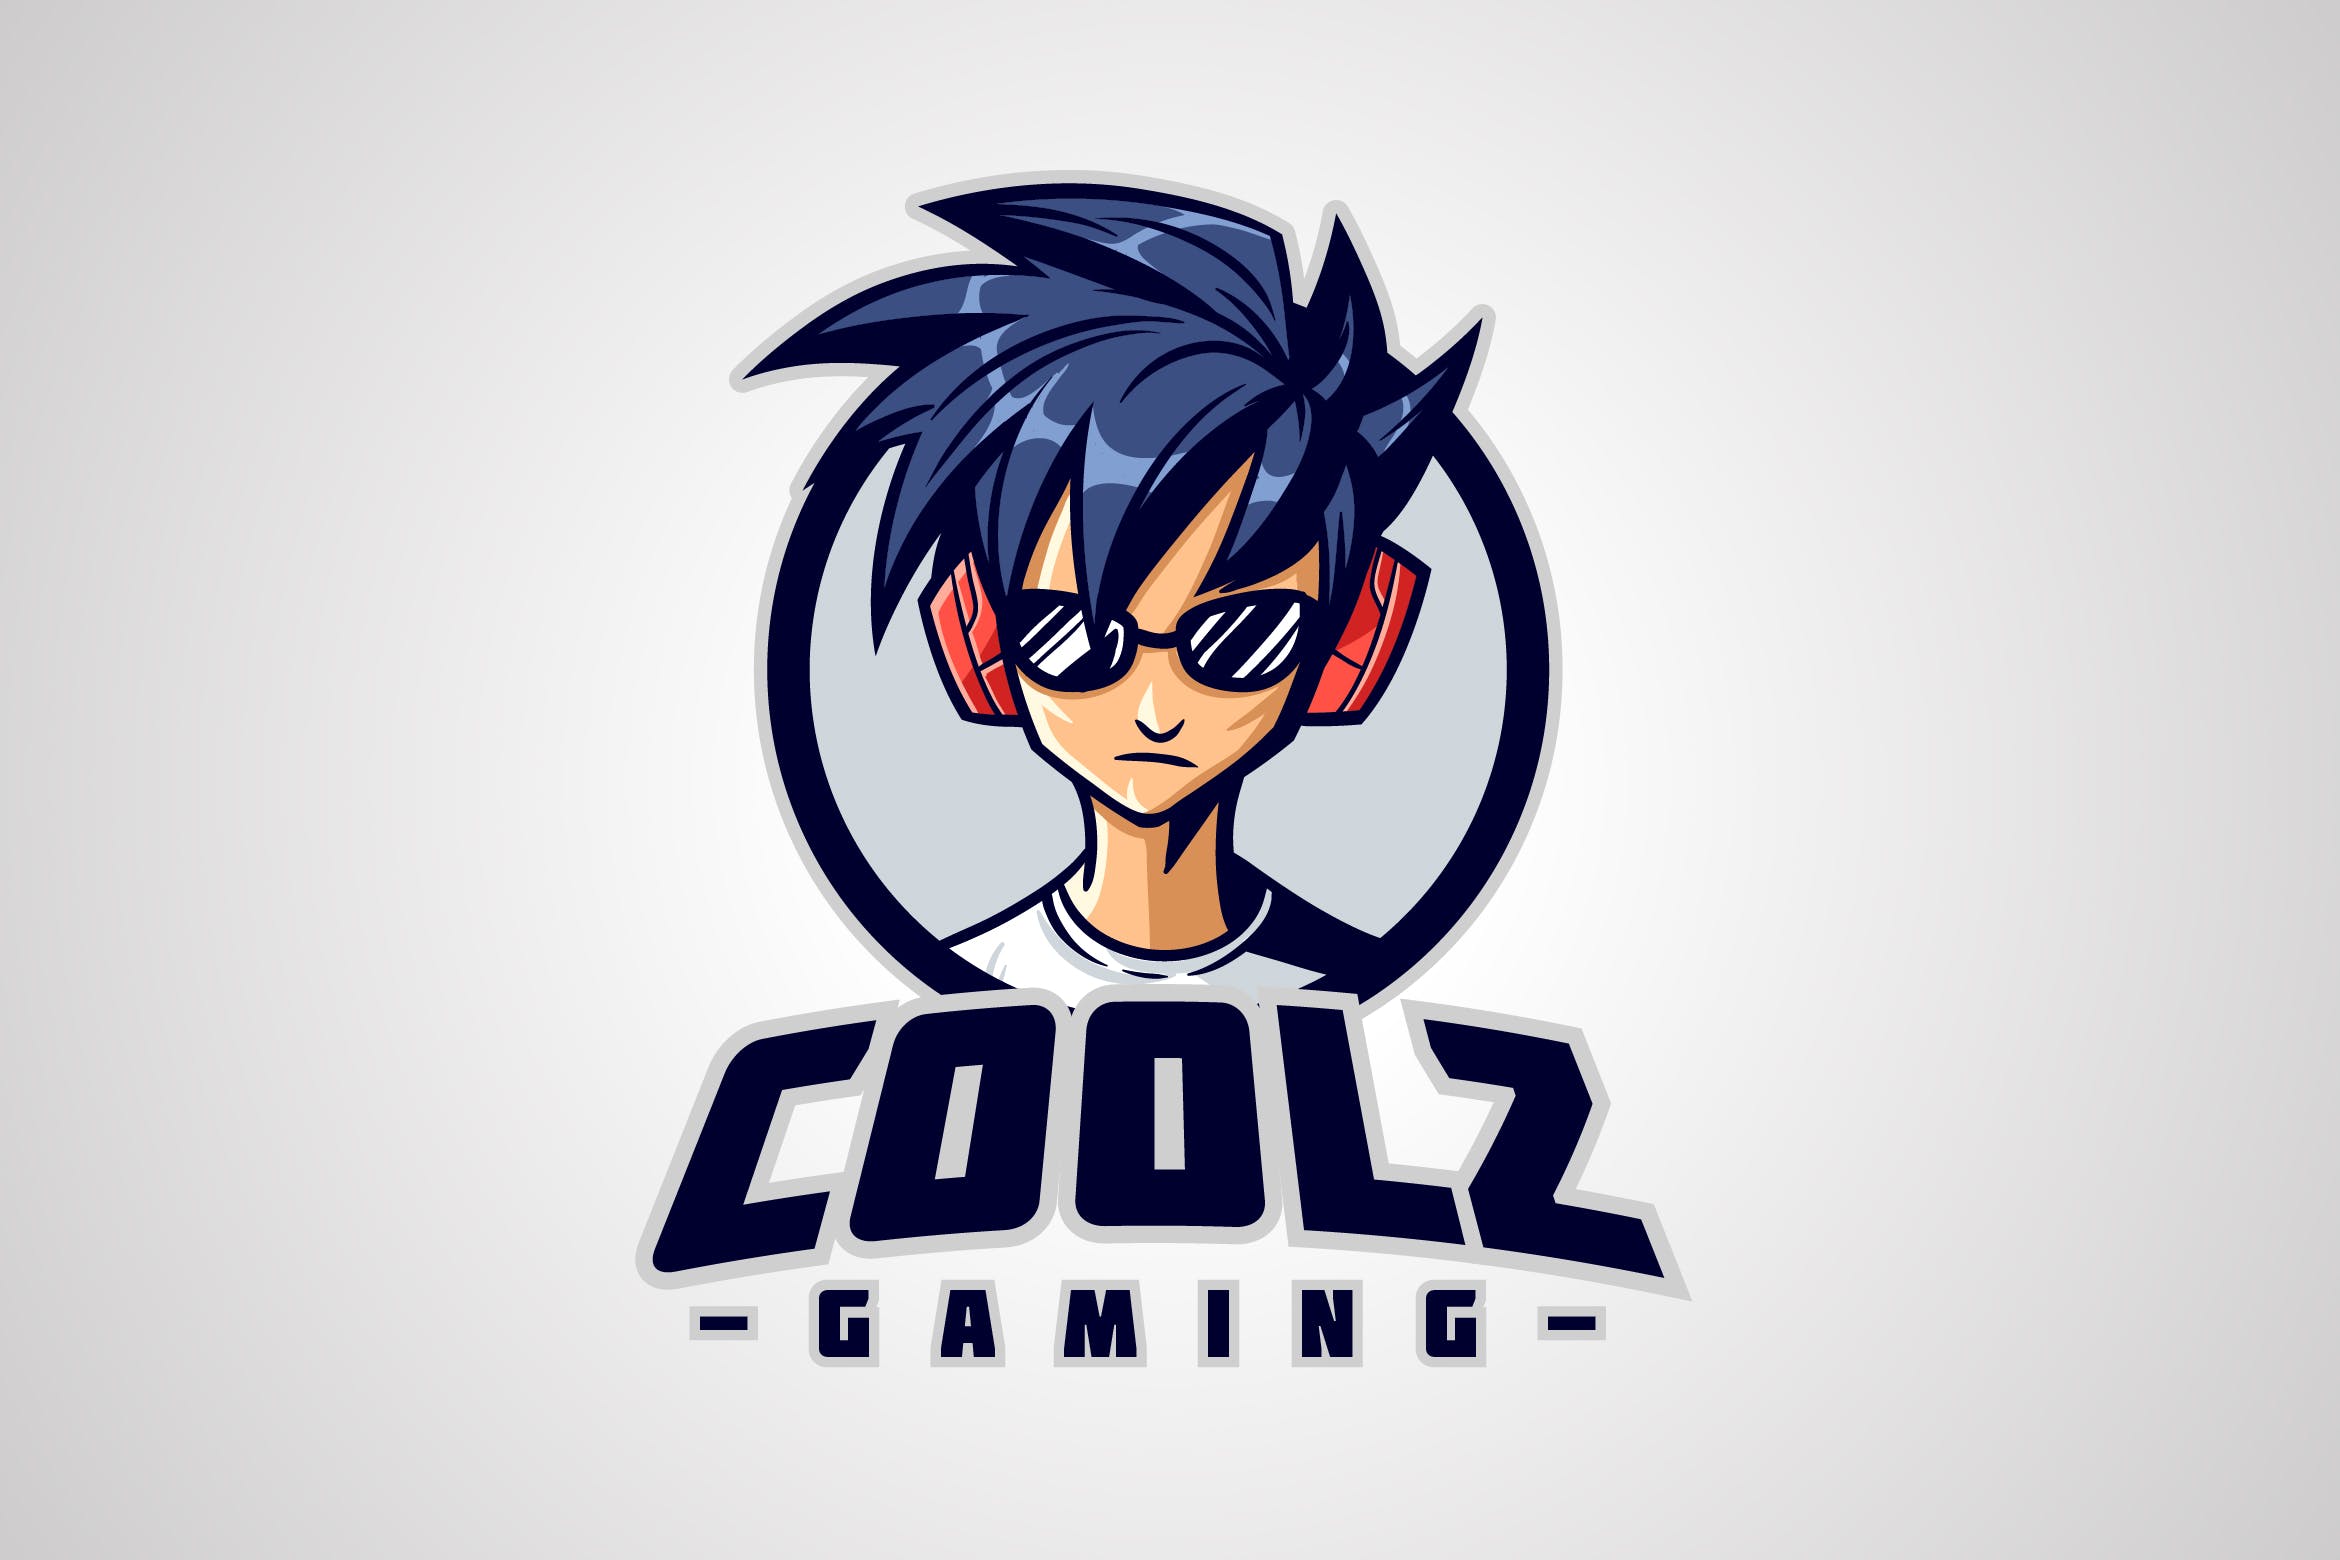 吉祥物Logo酷炫游戏玩家角色标志设计模板 Cool Gamer Character Mascot Logo设计素材模板